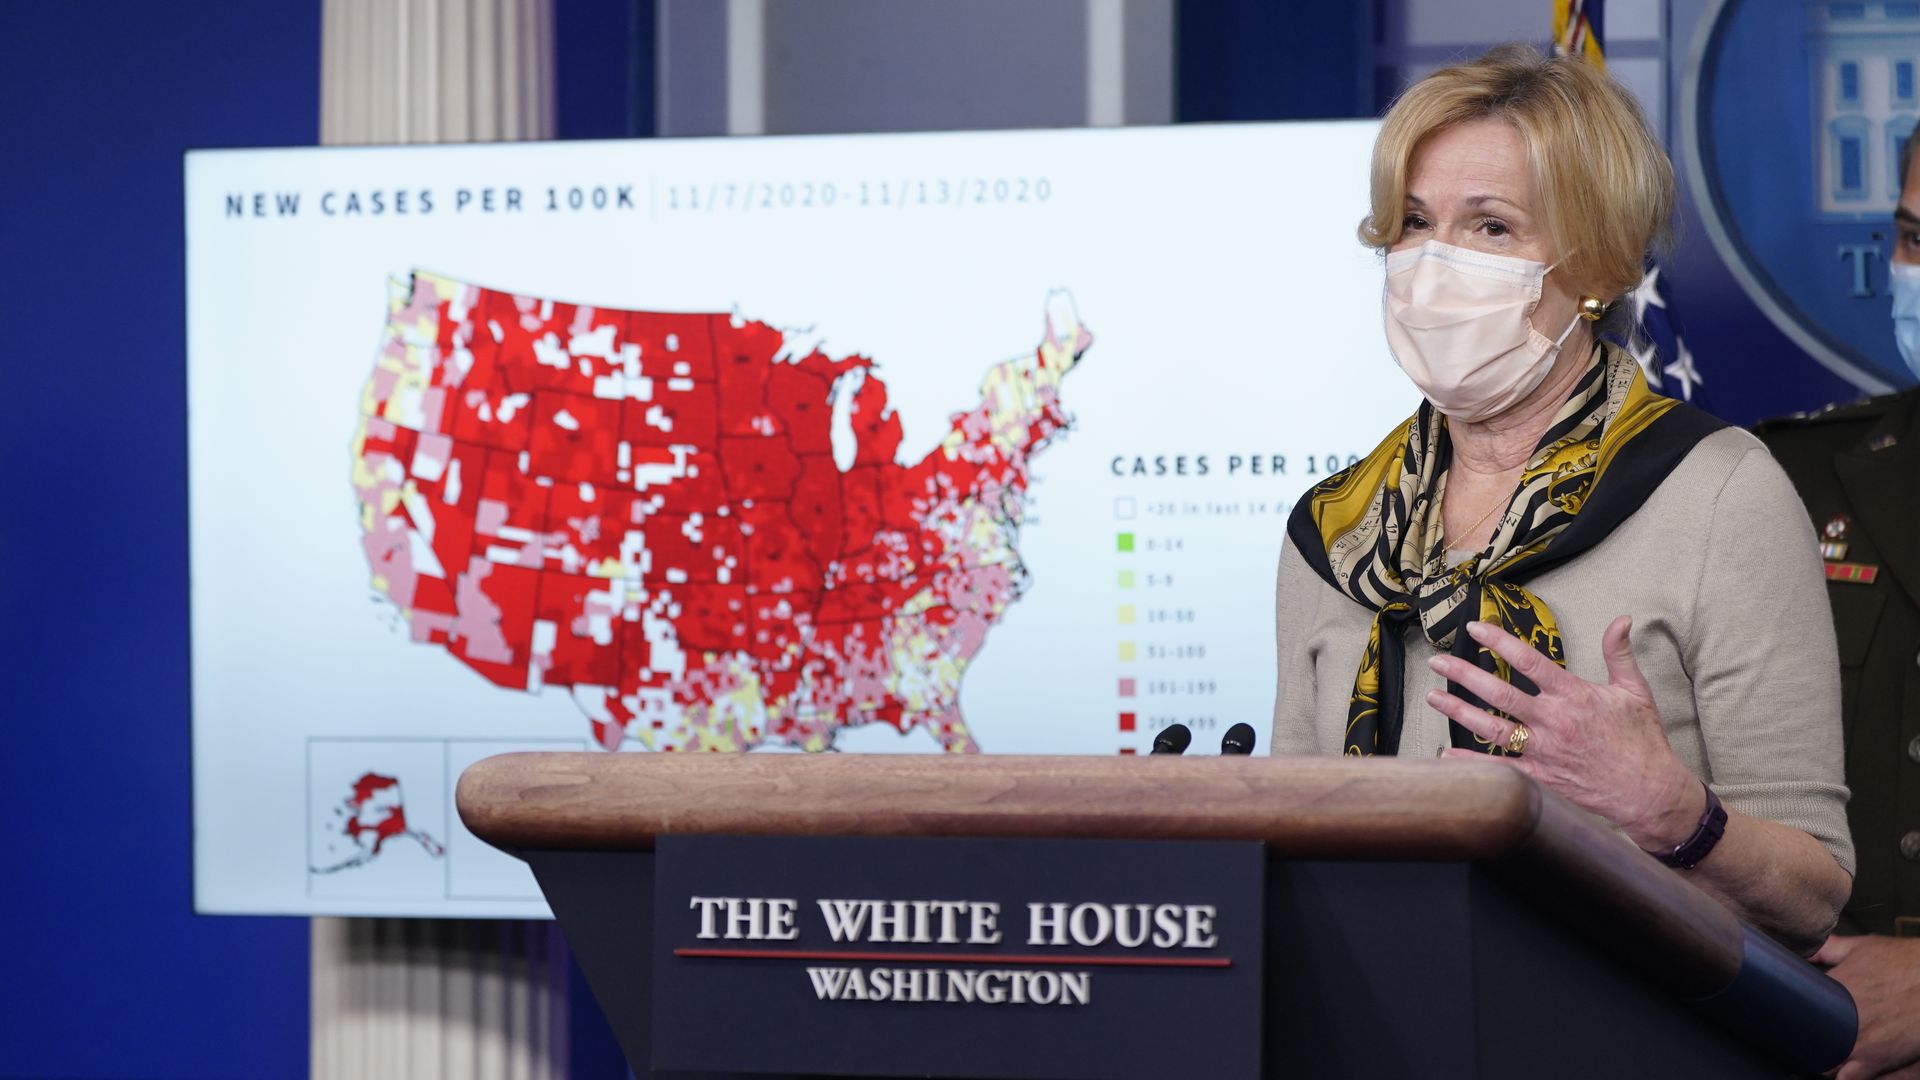 Deborah Birx, coronavirus response coordinator, speaks during a news conference in the White House in Washington, D.C., U.S., on Thursday, Nov. 19, 2020. 